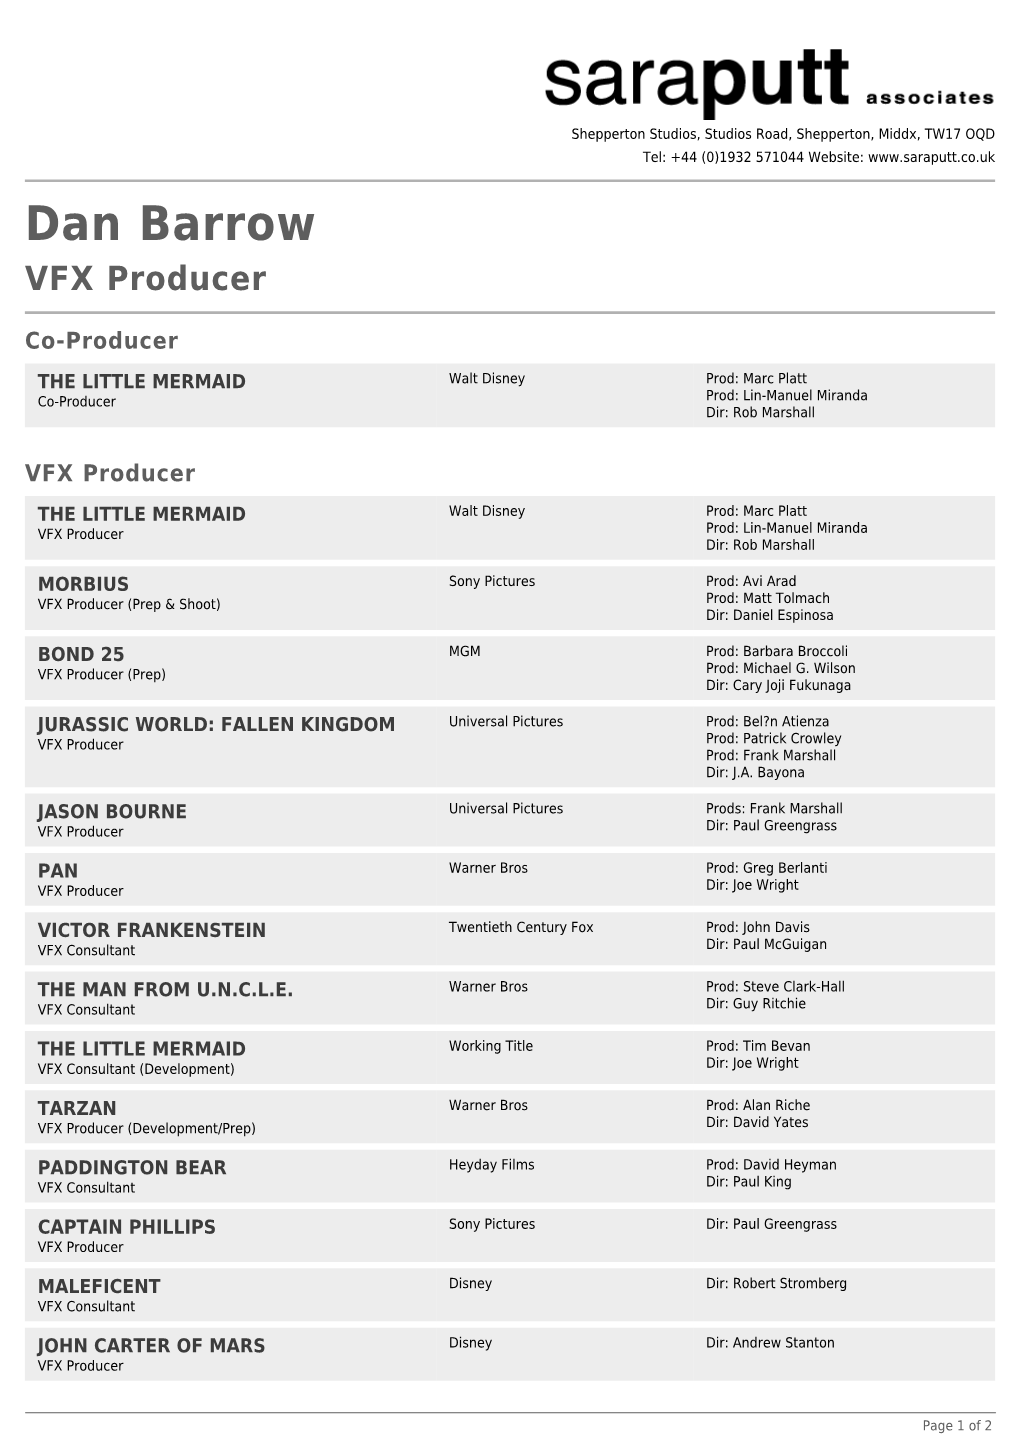 Dan Barrow VFX Producer